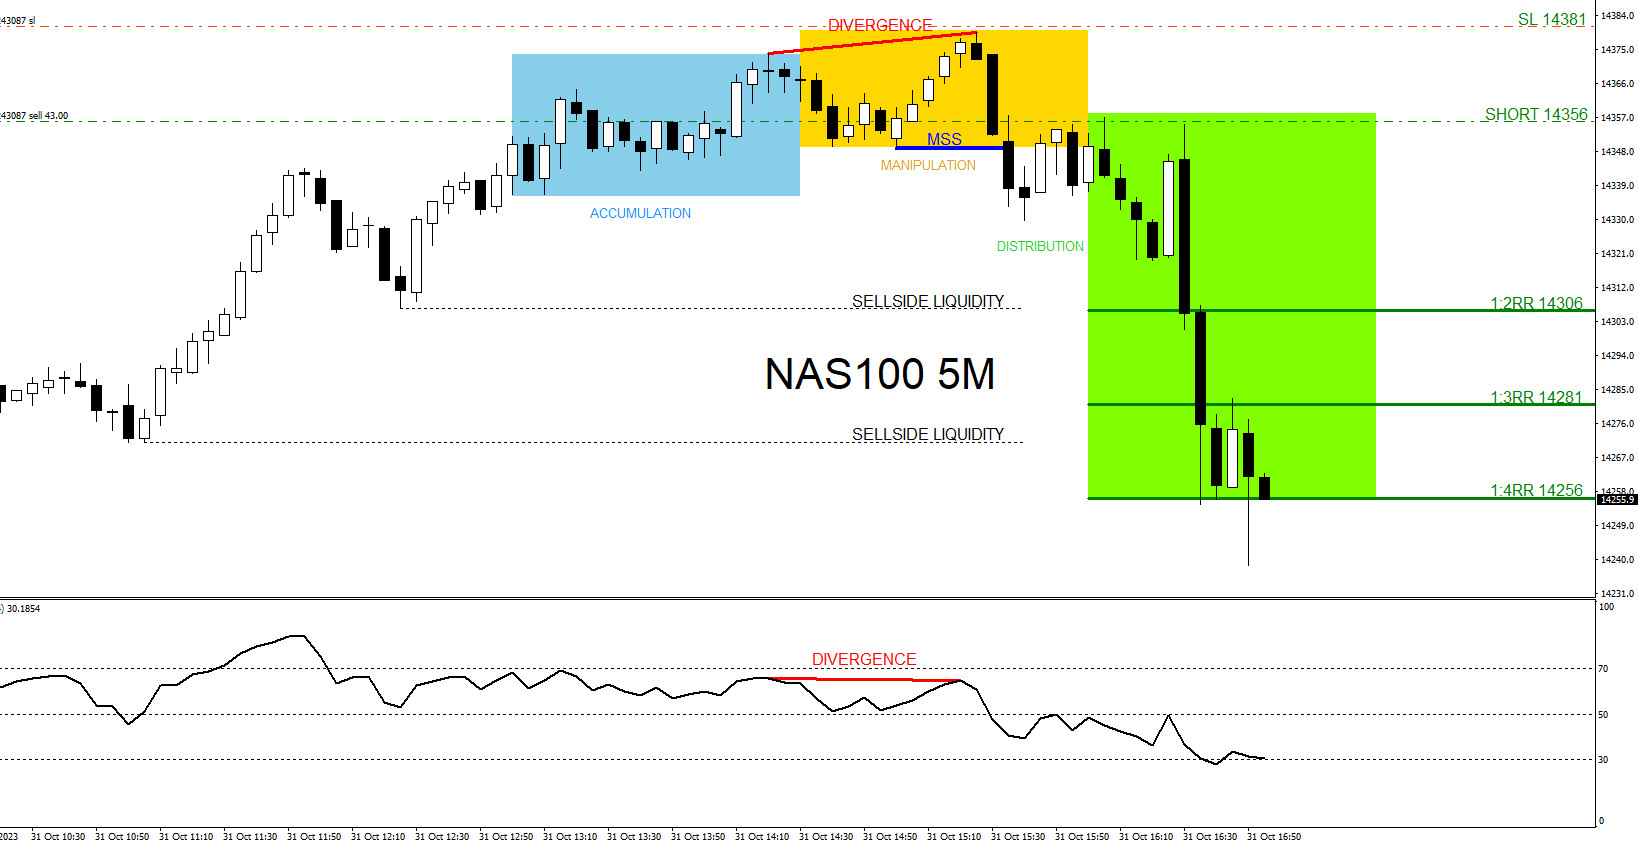 NASDAQ100 : Accumulation, Manipulation, Distribution